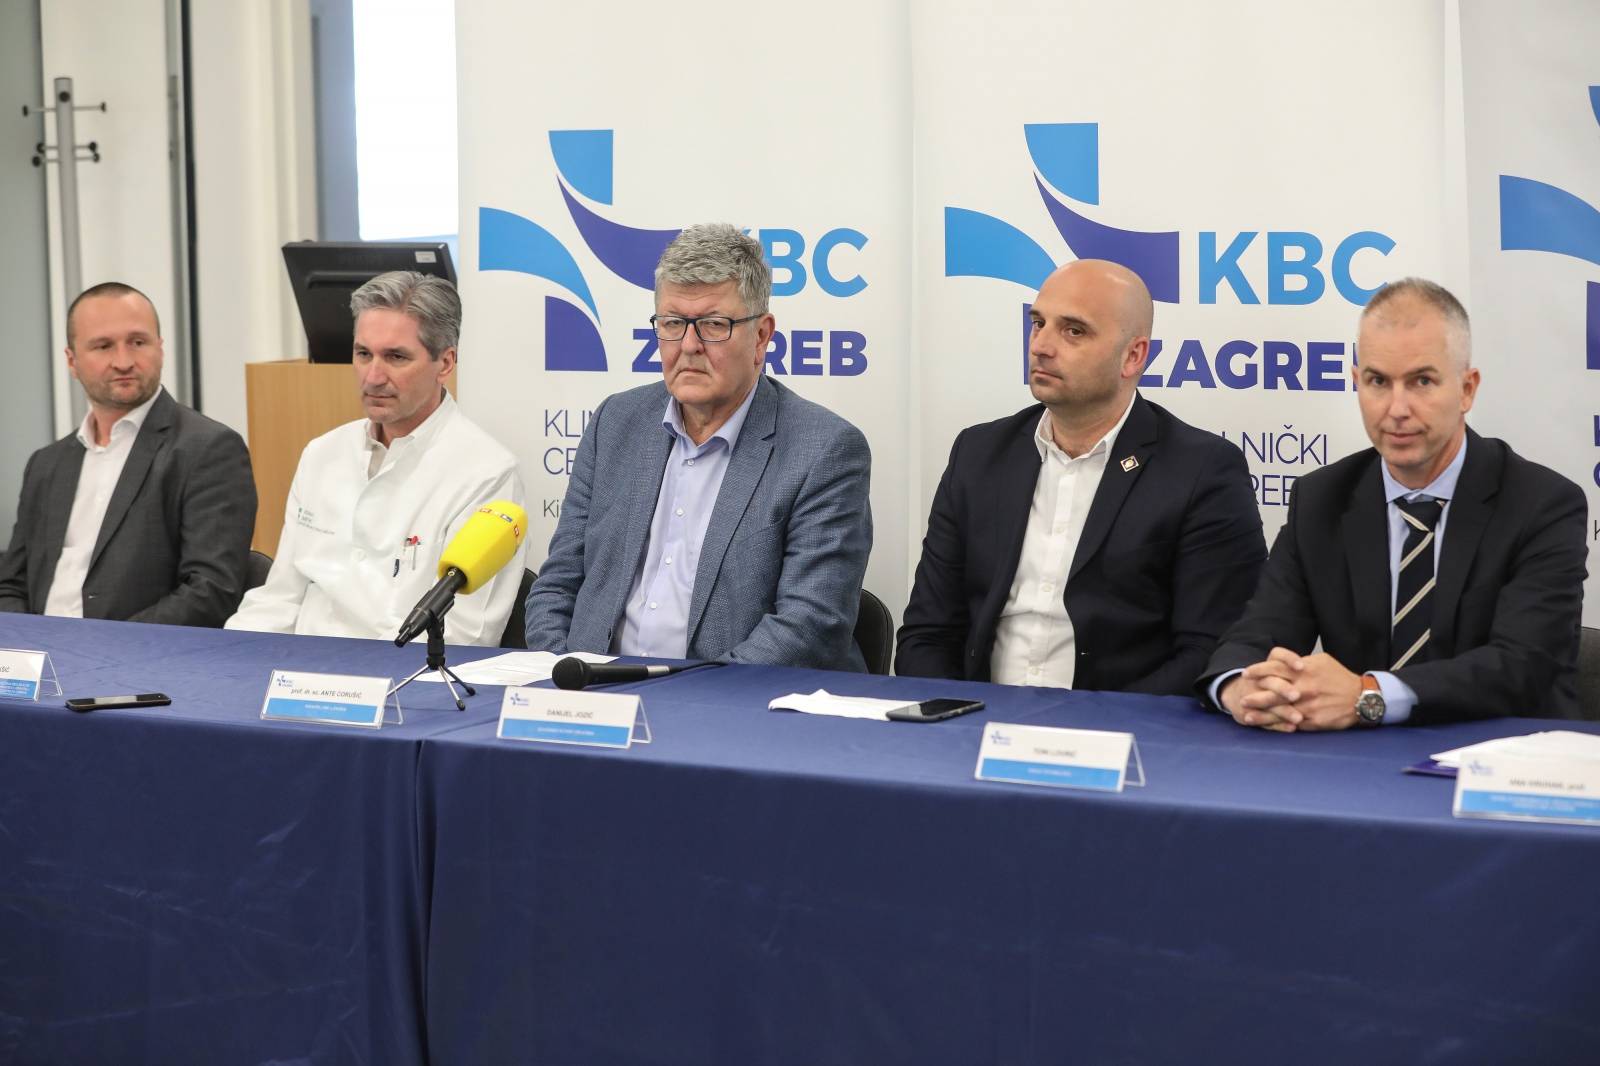 Zagreb: U KBC Zagreb postavljene termalne kamere za detektiranje temperature